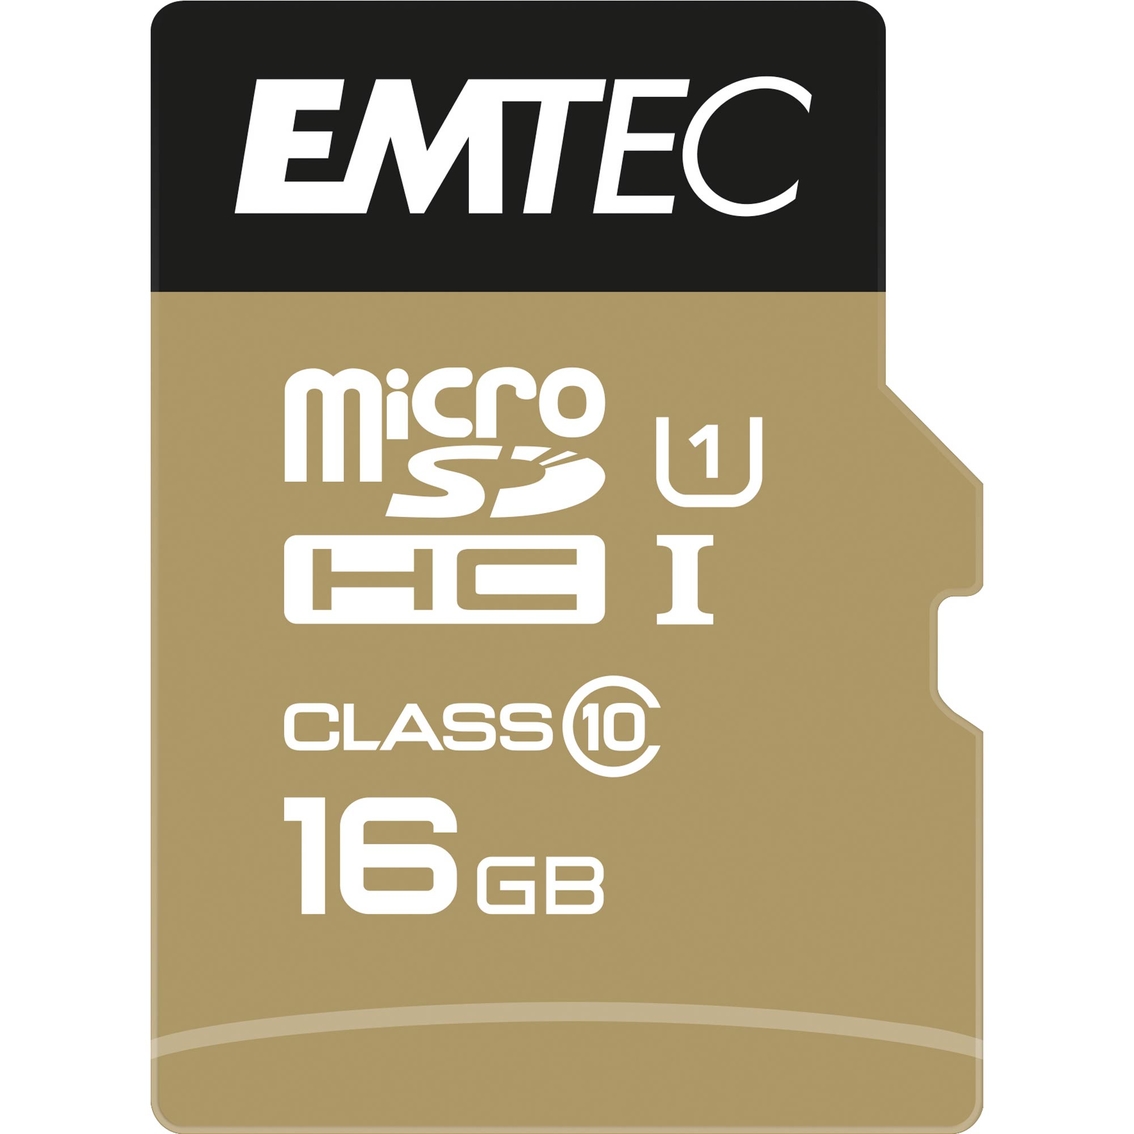 EMTEC 16GB MicroSD Class 10 UHS1 U1 with SD Adapter